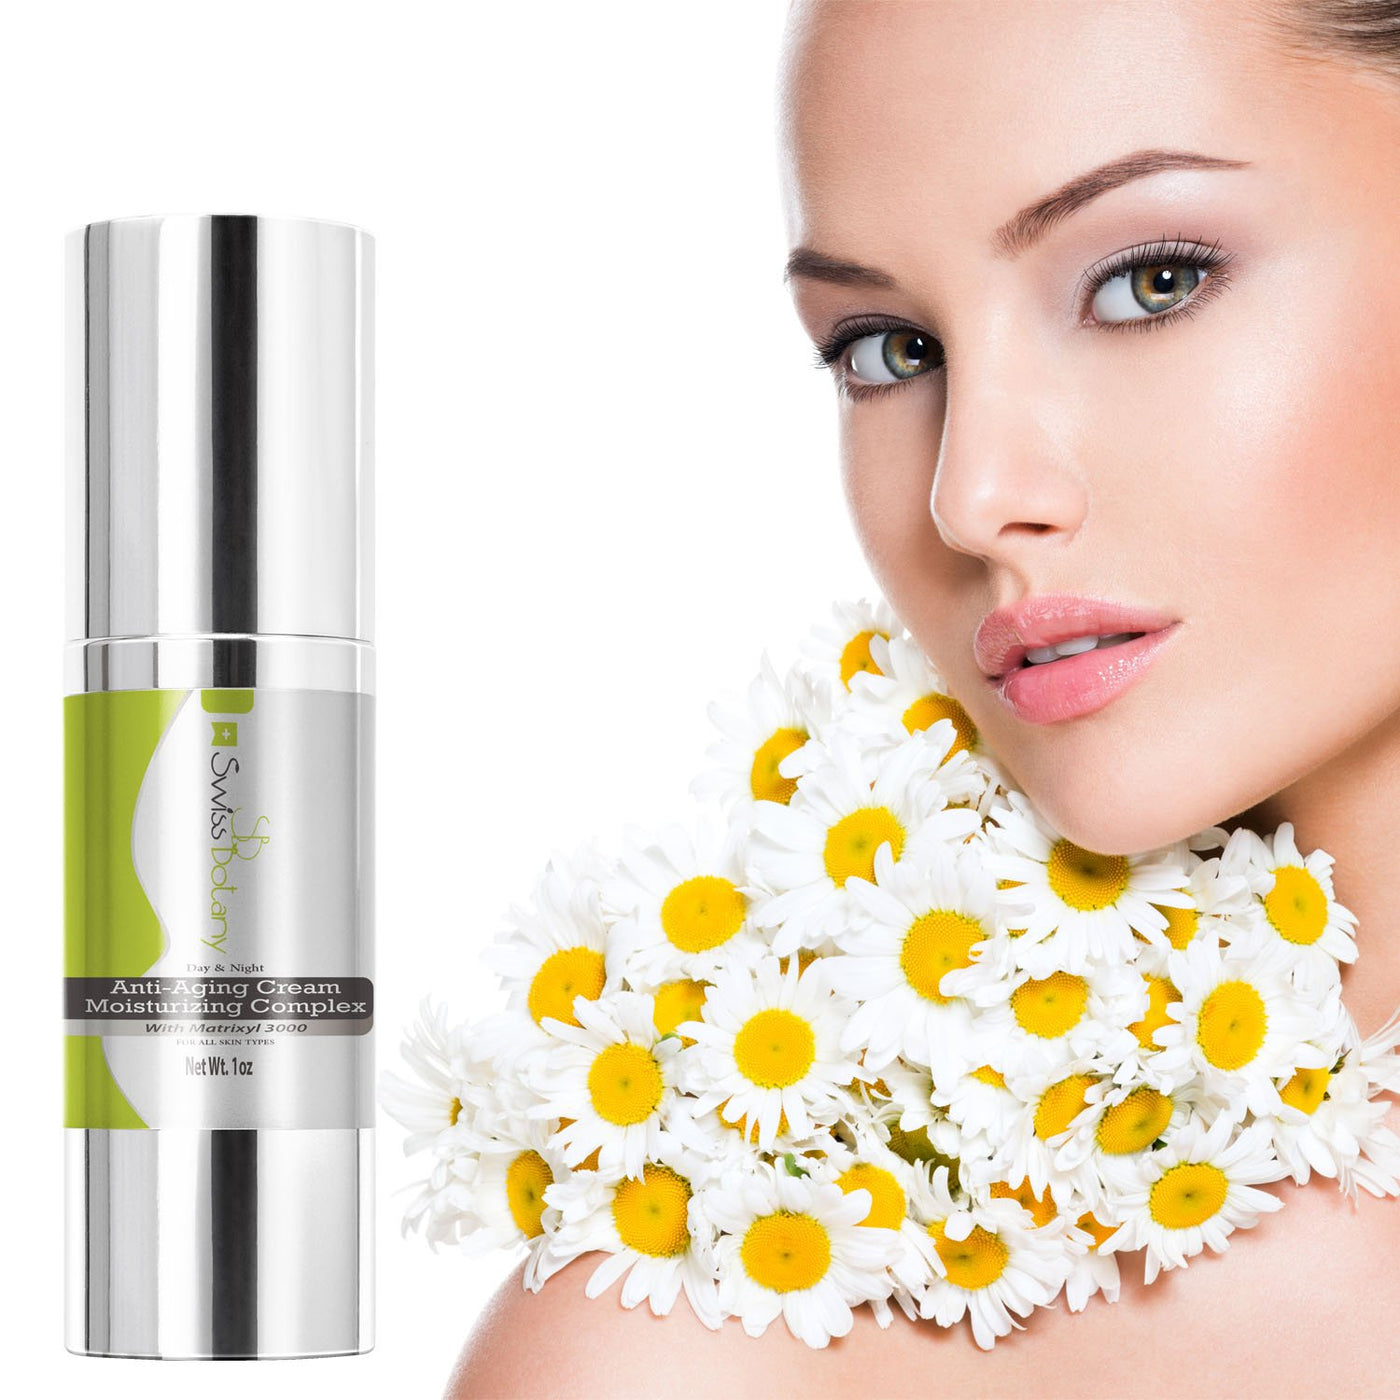 Swiss Botany moisturizer Anti Aging Cream Moisturizing Face Complex with Matrixyl 3000